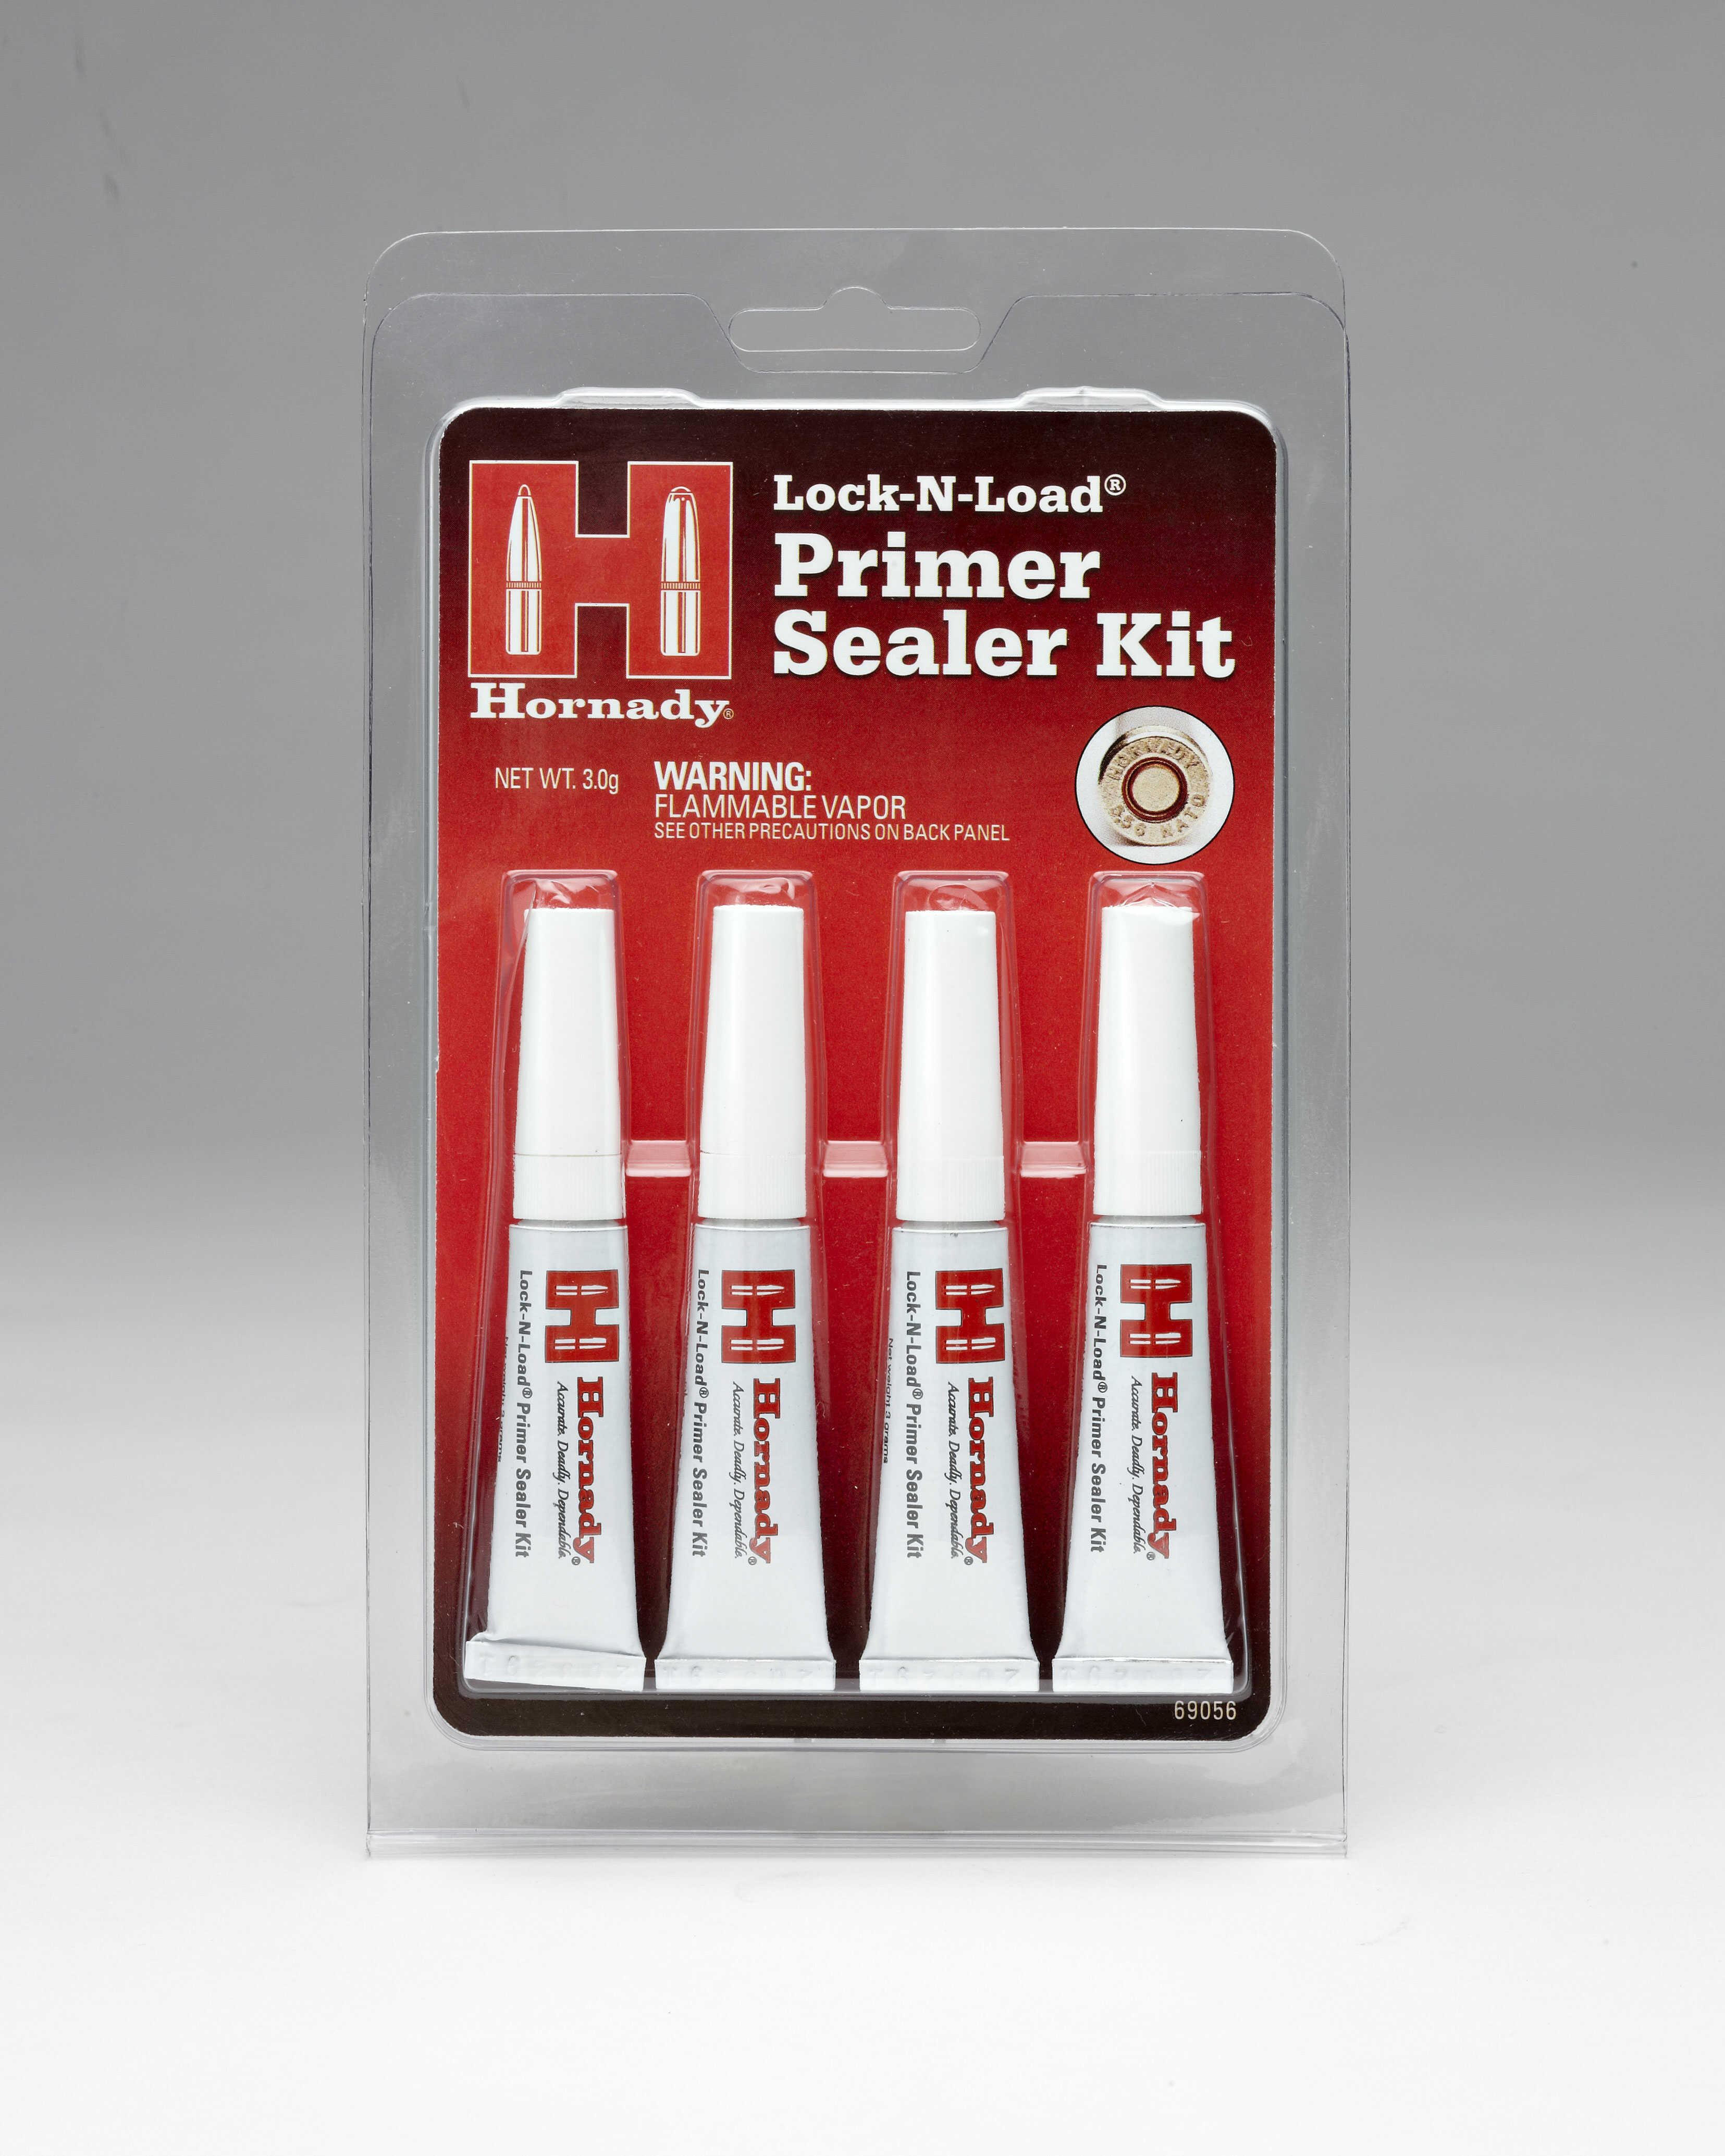 One Shot Primer Sealer Kit